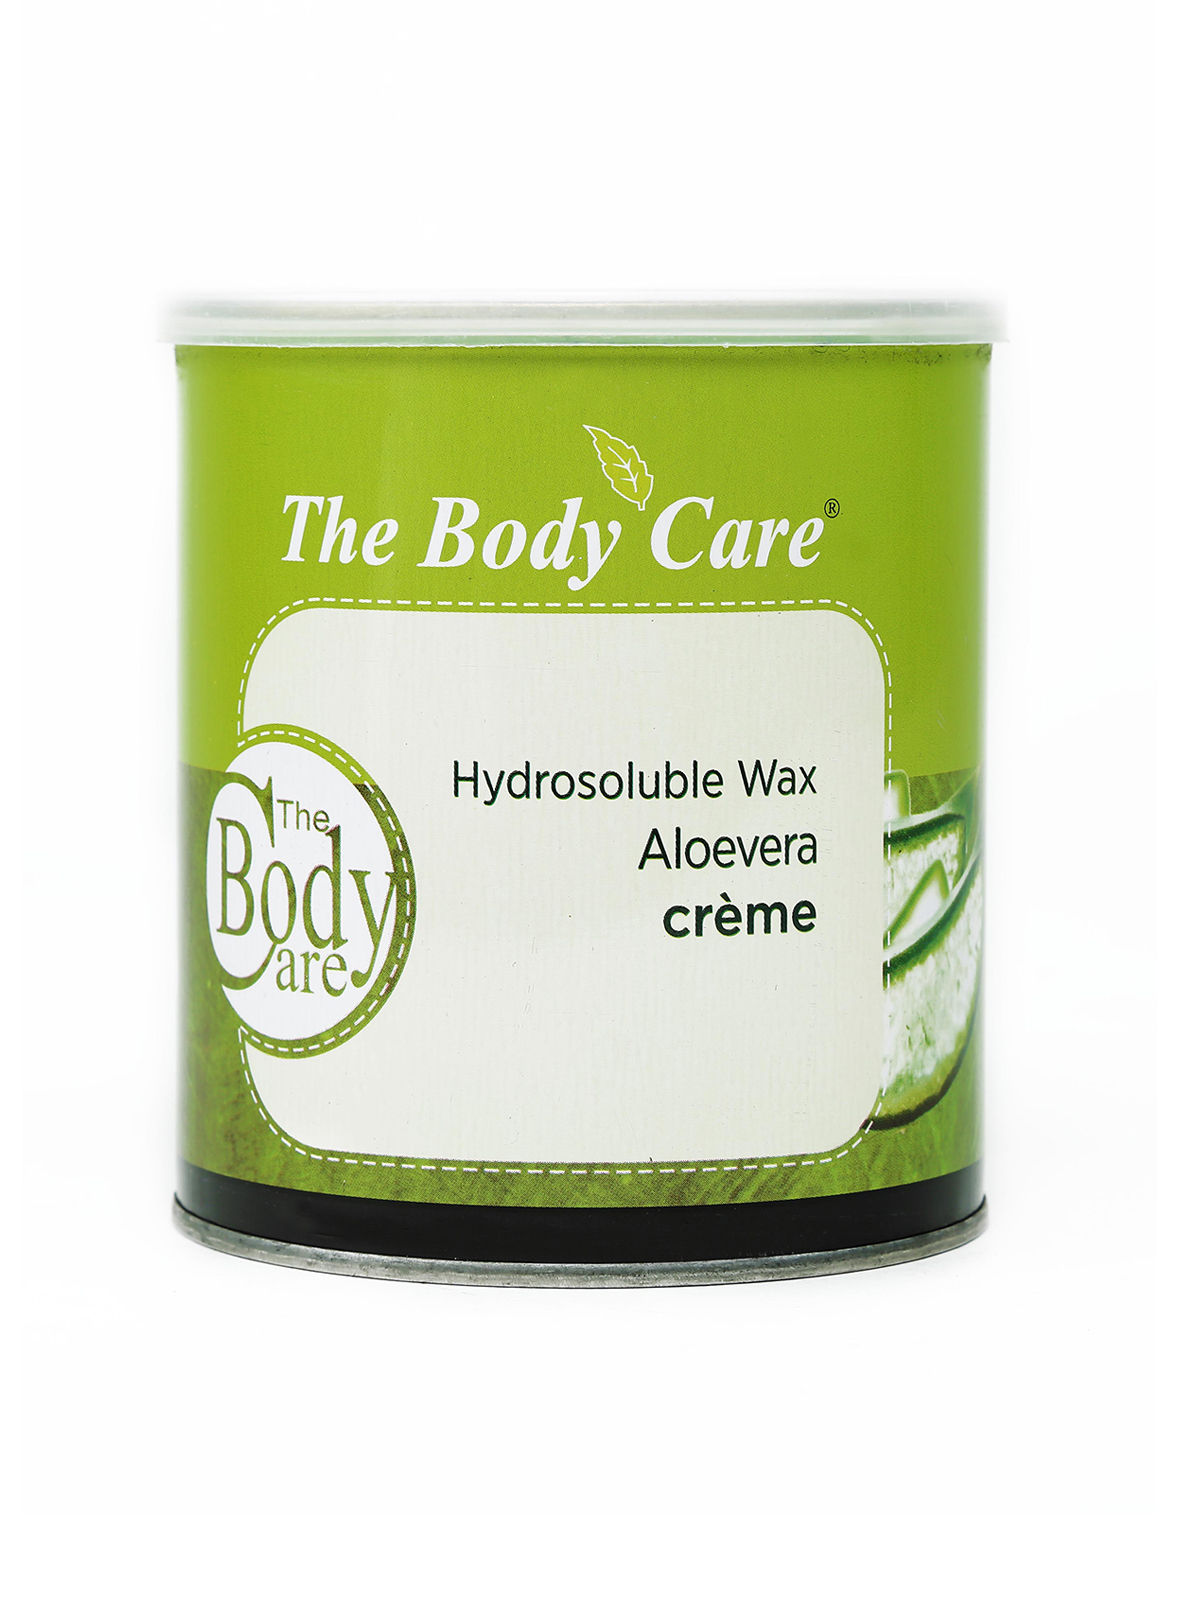 The Body Care Aloevera Hydrosoluble Wax Creme